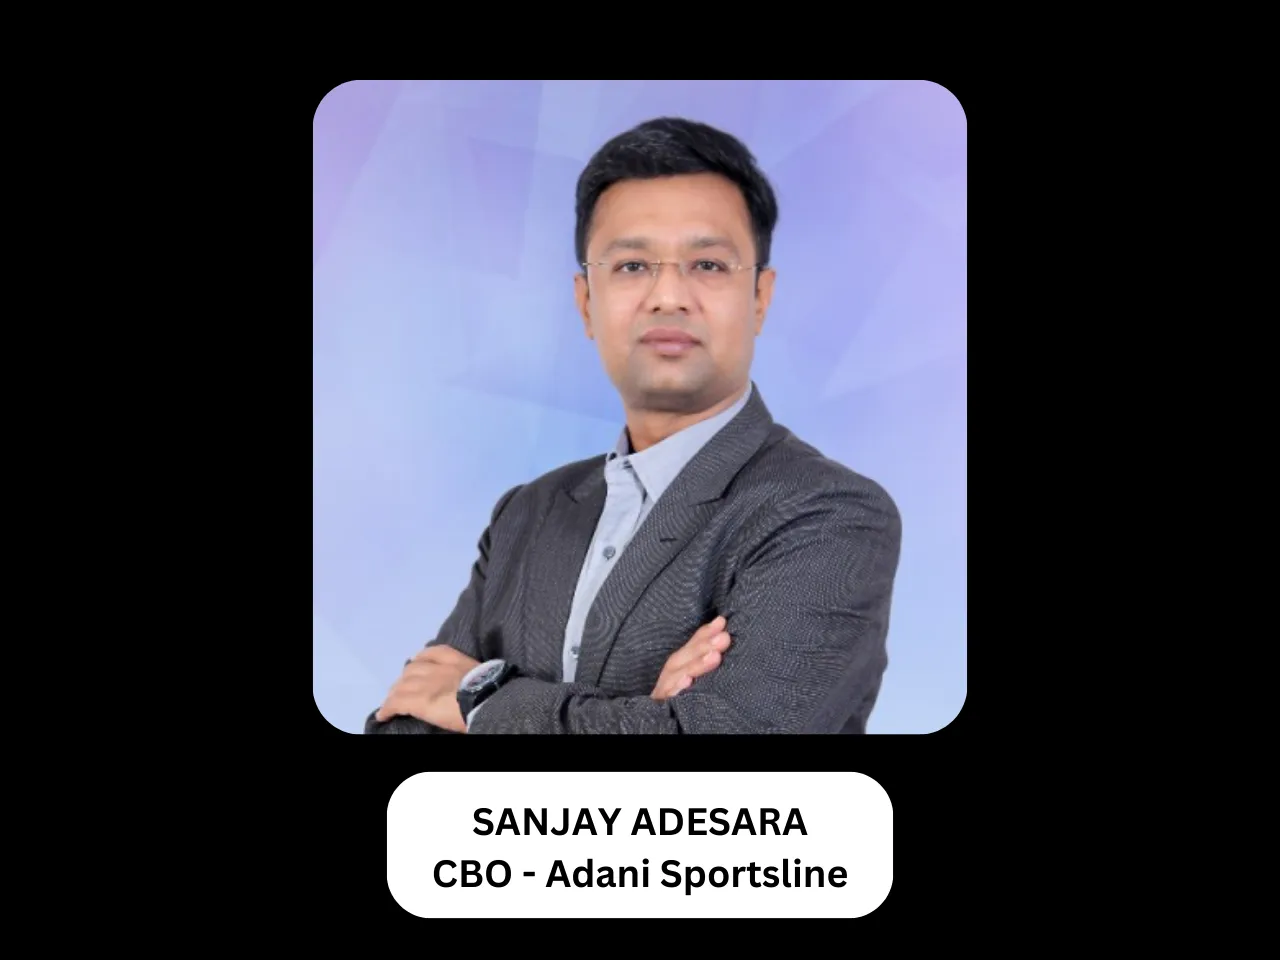 Sanjay Adesara